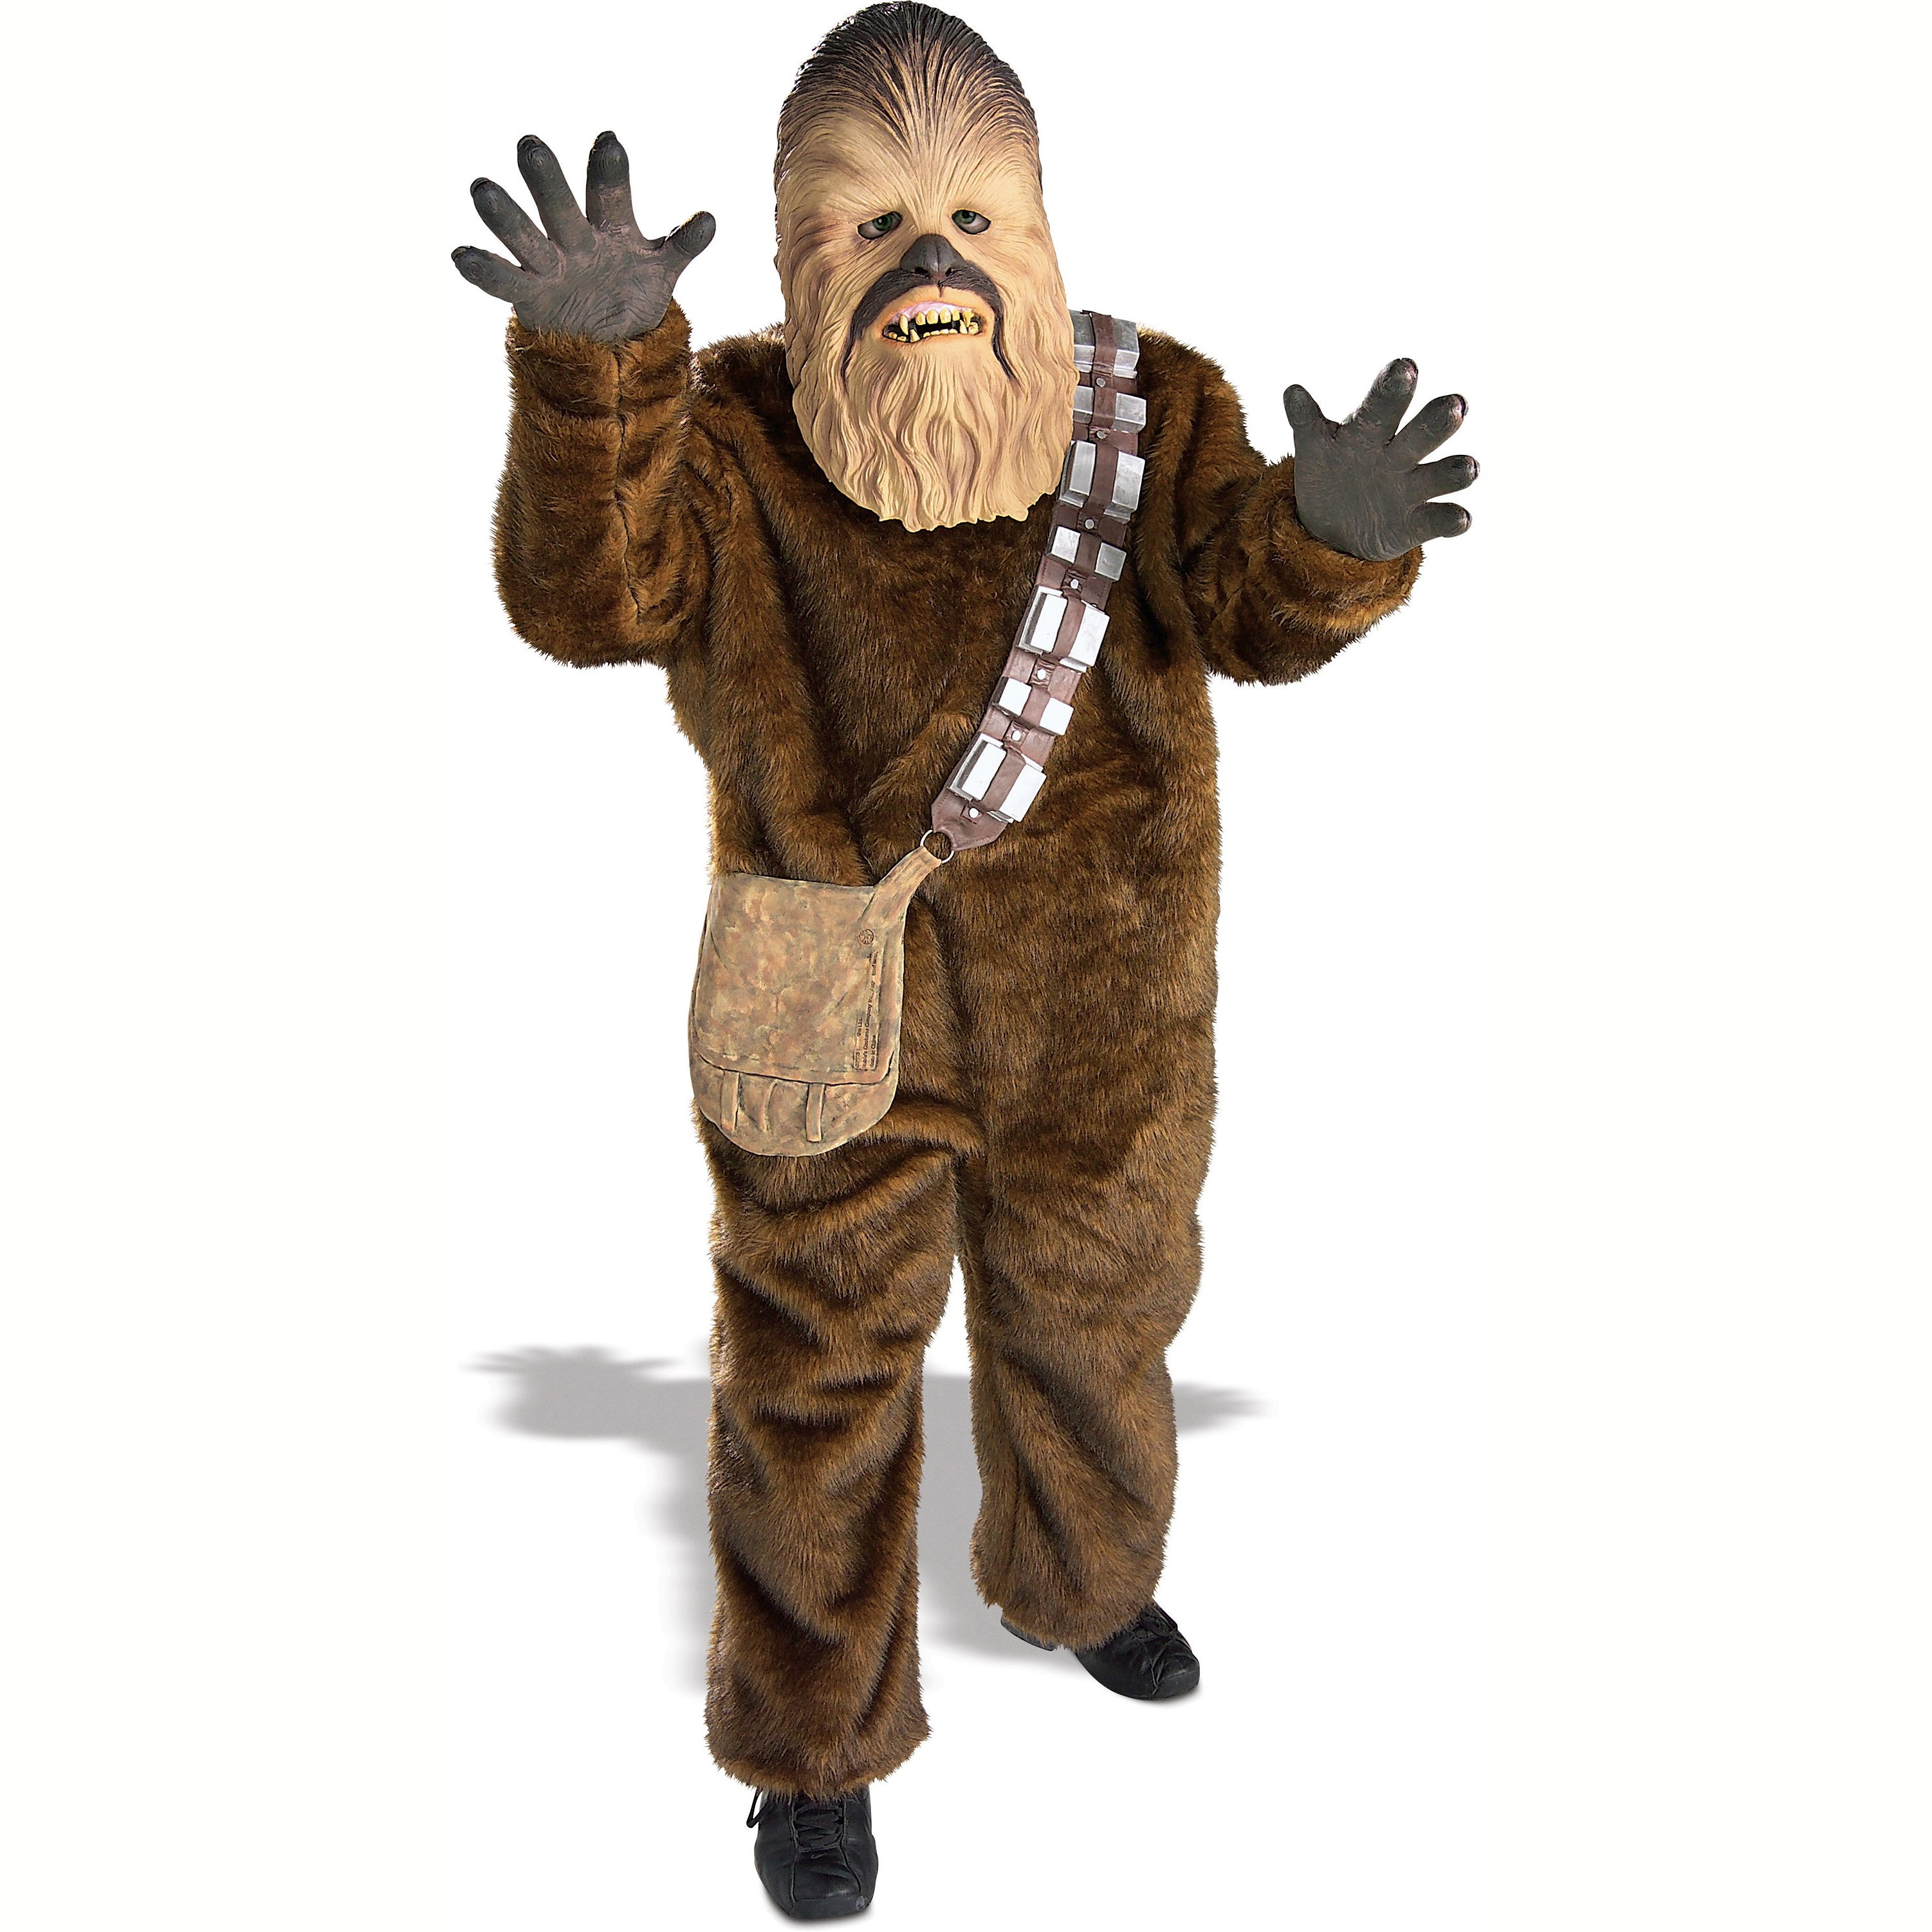 Star Wars Chewbacca Costume Deluxe Cappel's